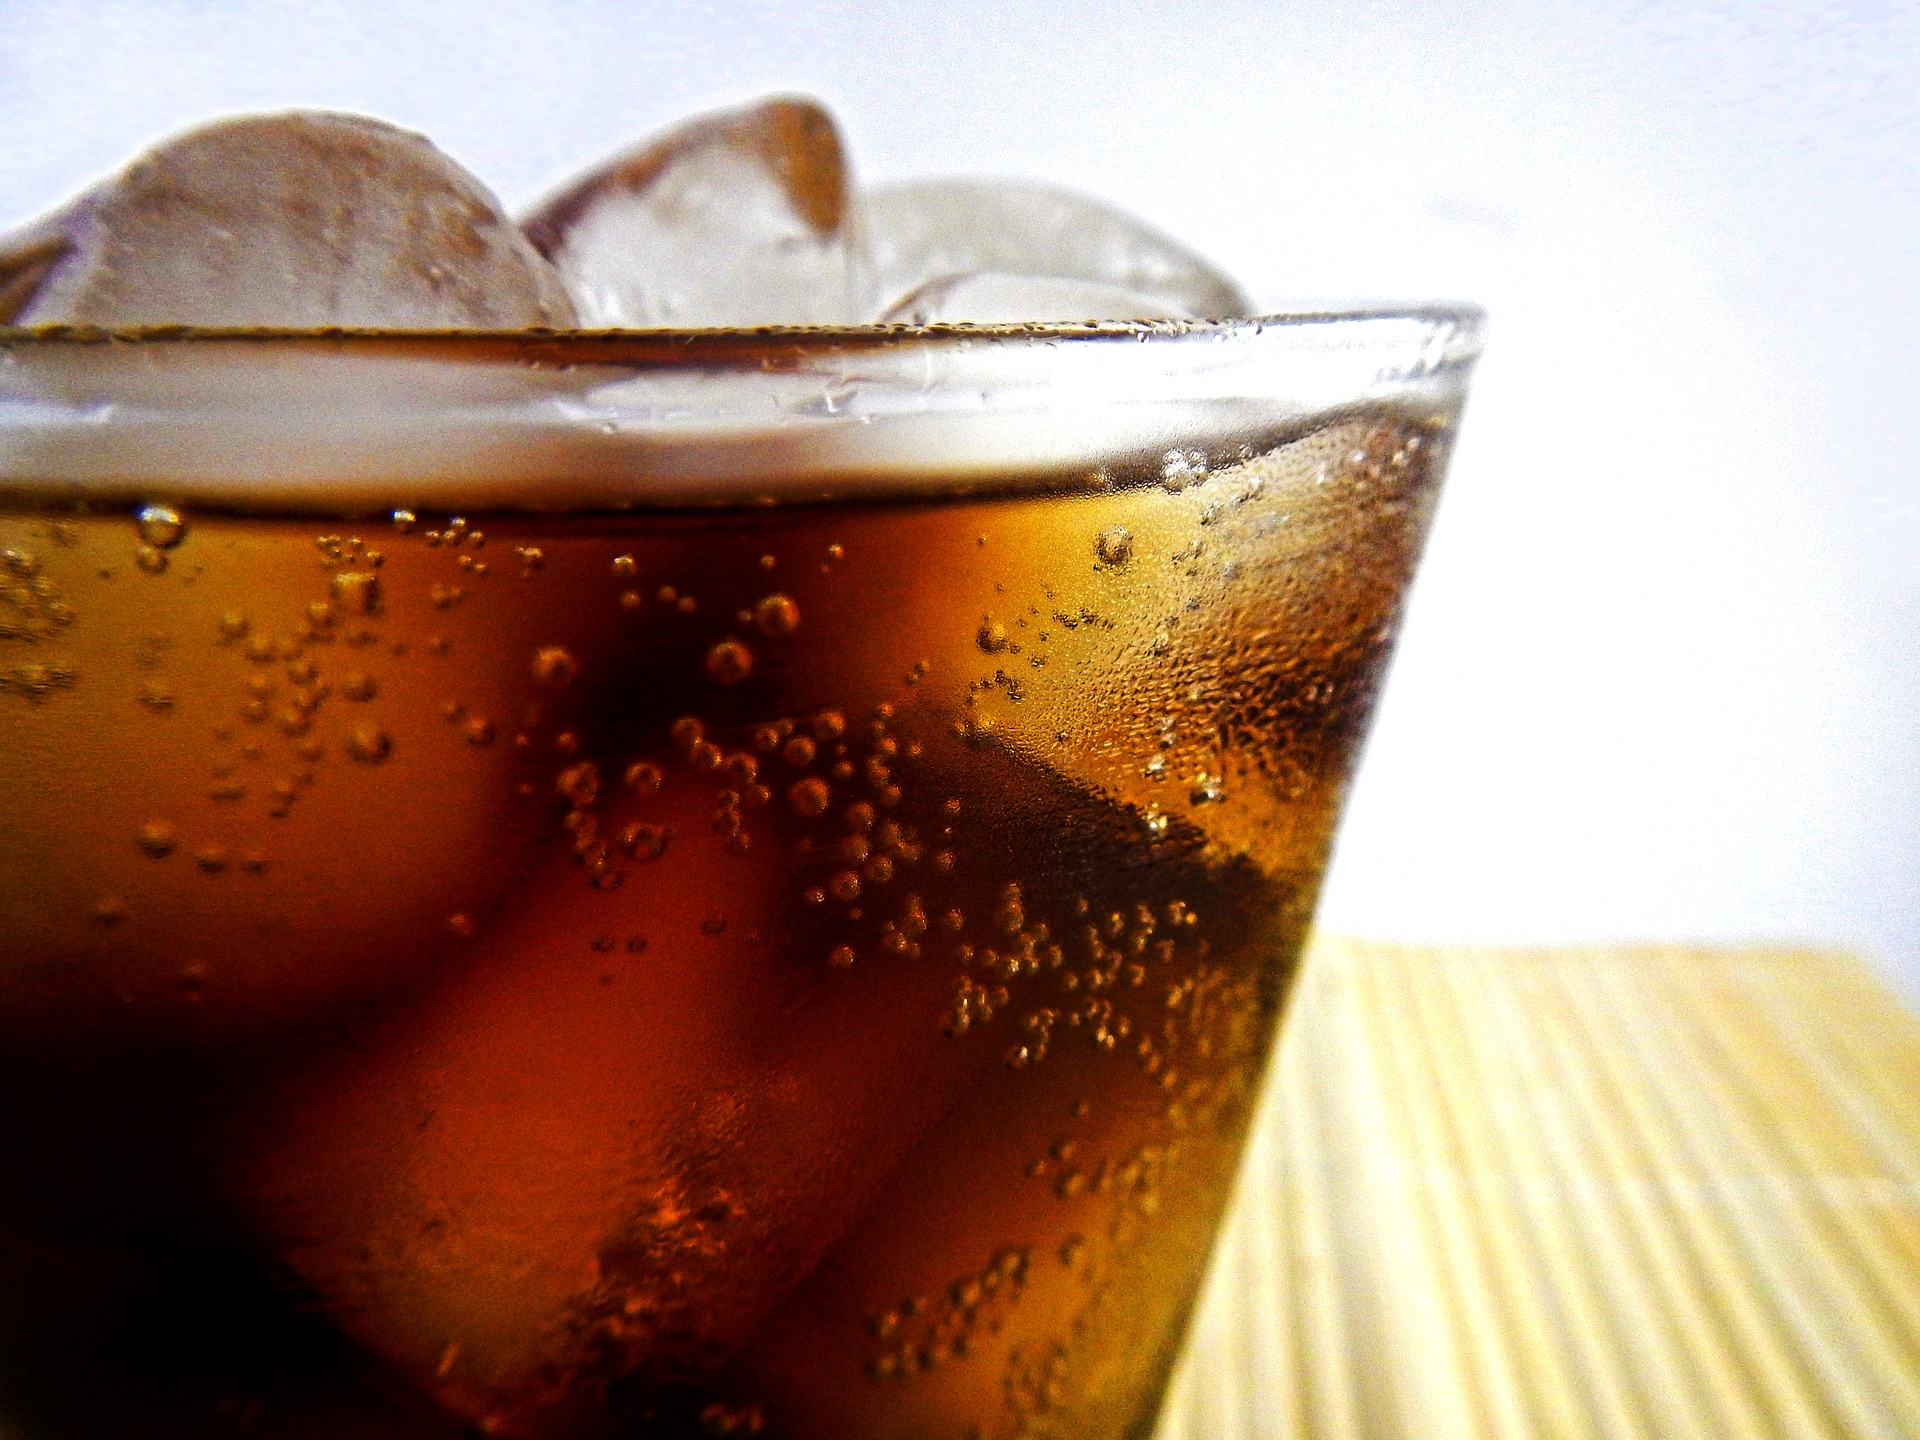 Soda soft drink in a glass (source: Lernestorod, Pixabay)